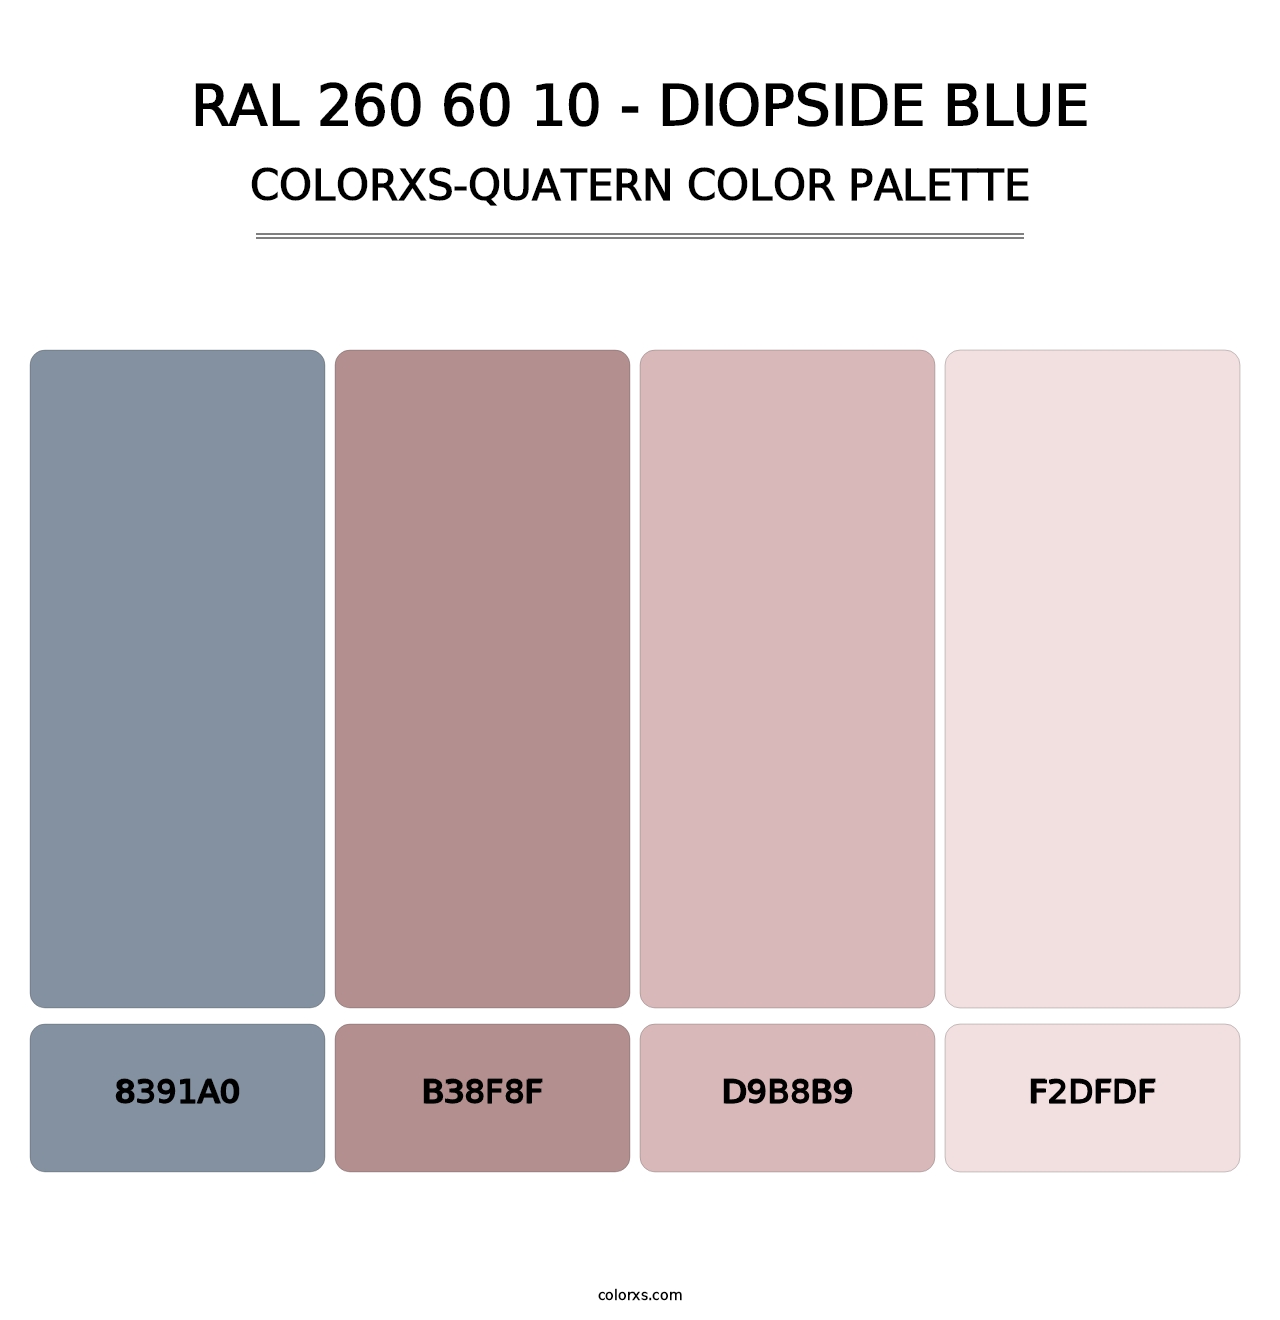 RAL 260 60 10 - Diopside Blue - Colorxs Quatern Palette